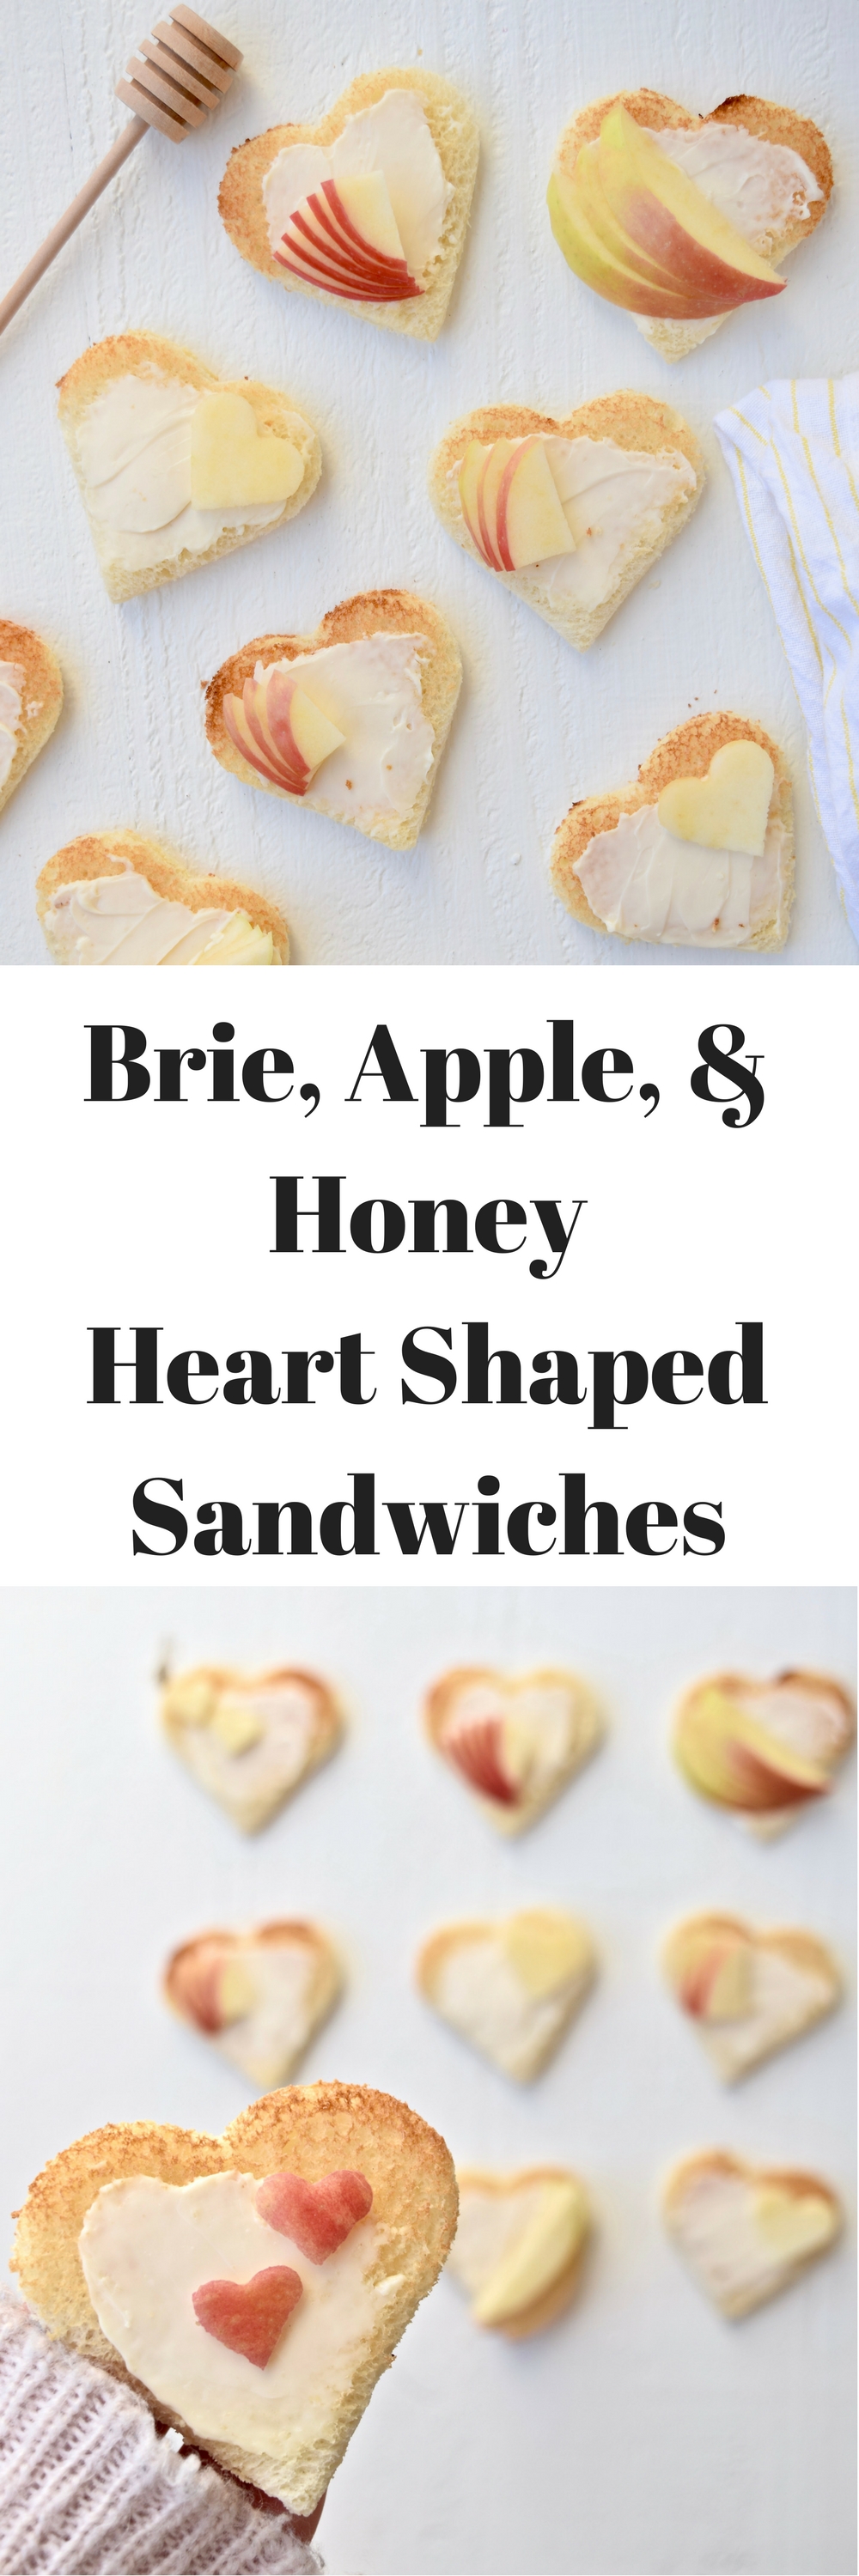 Brie, Apple, Honey, & Heart Shaped Sandwiches